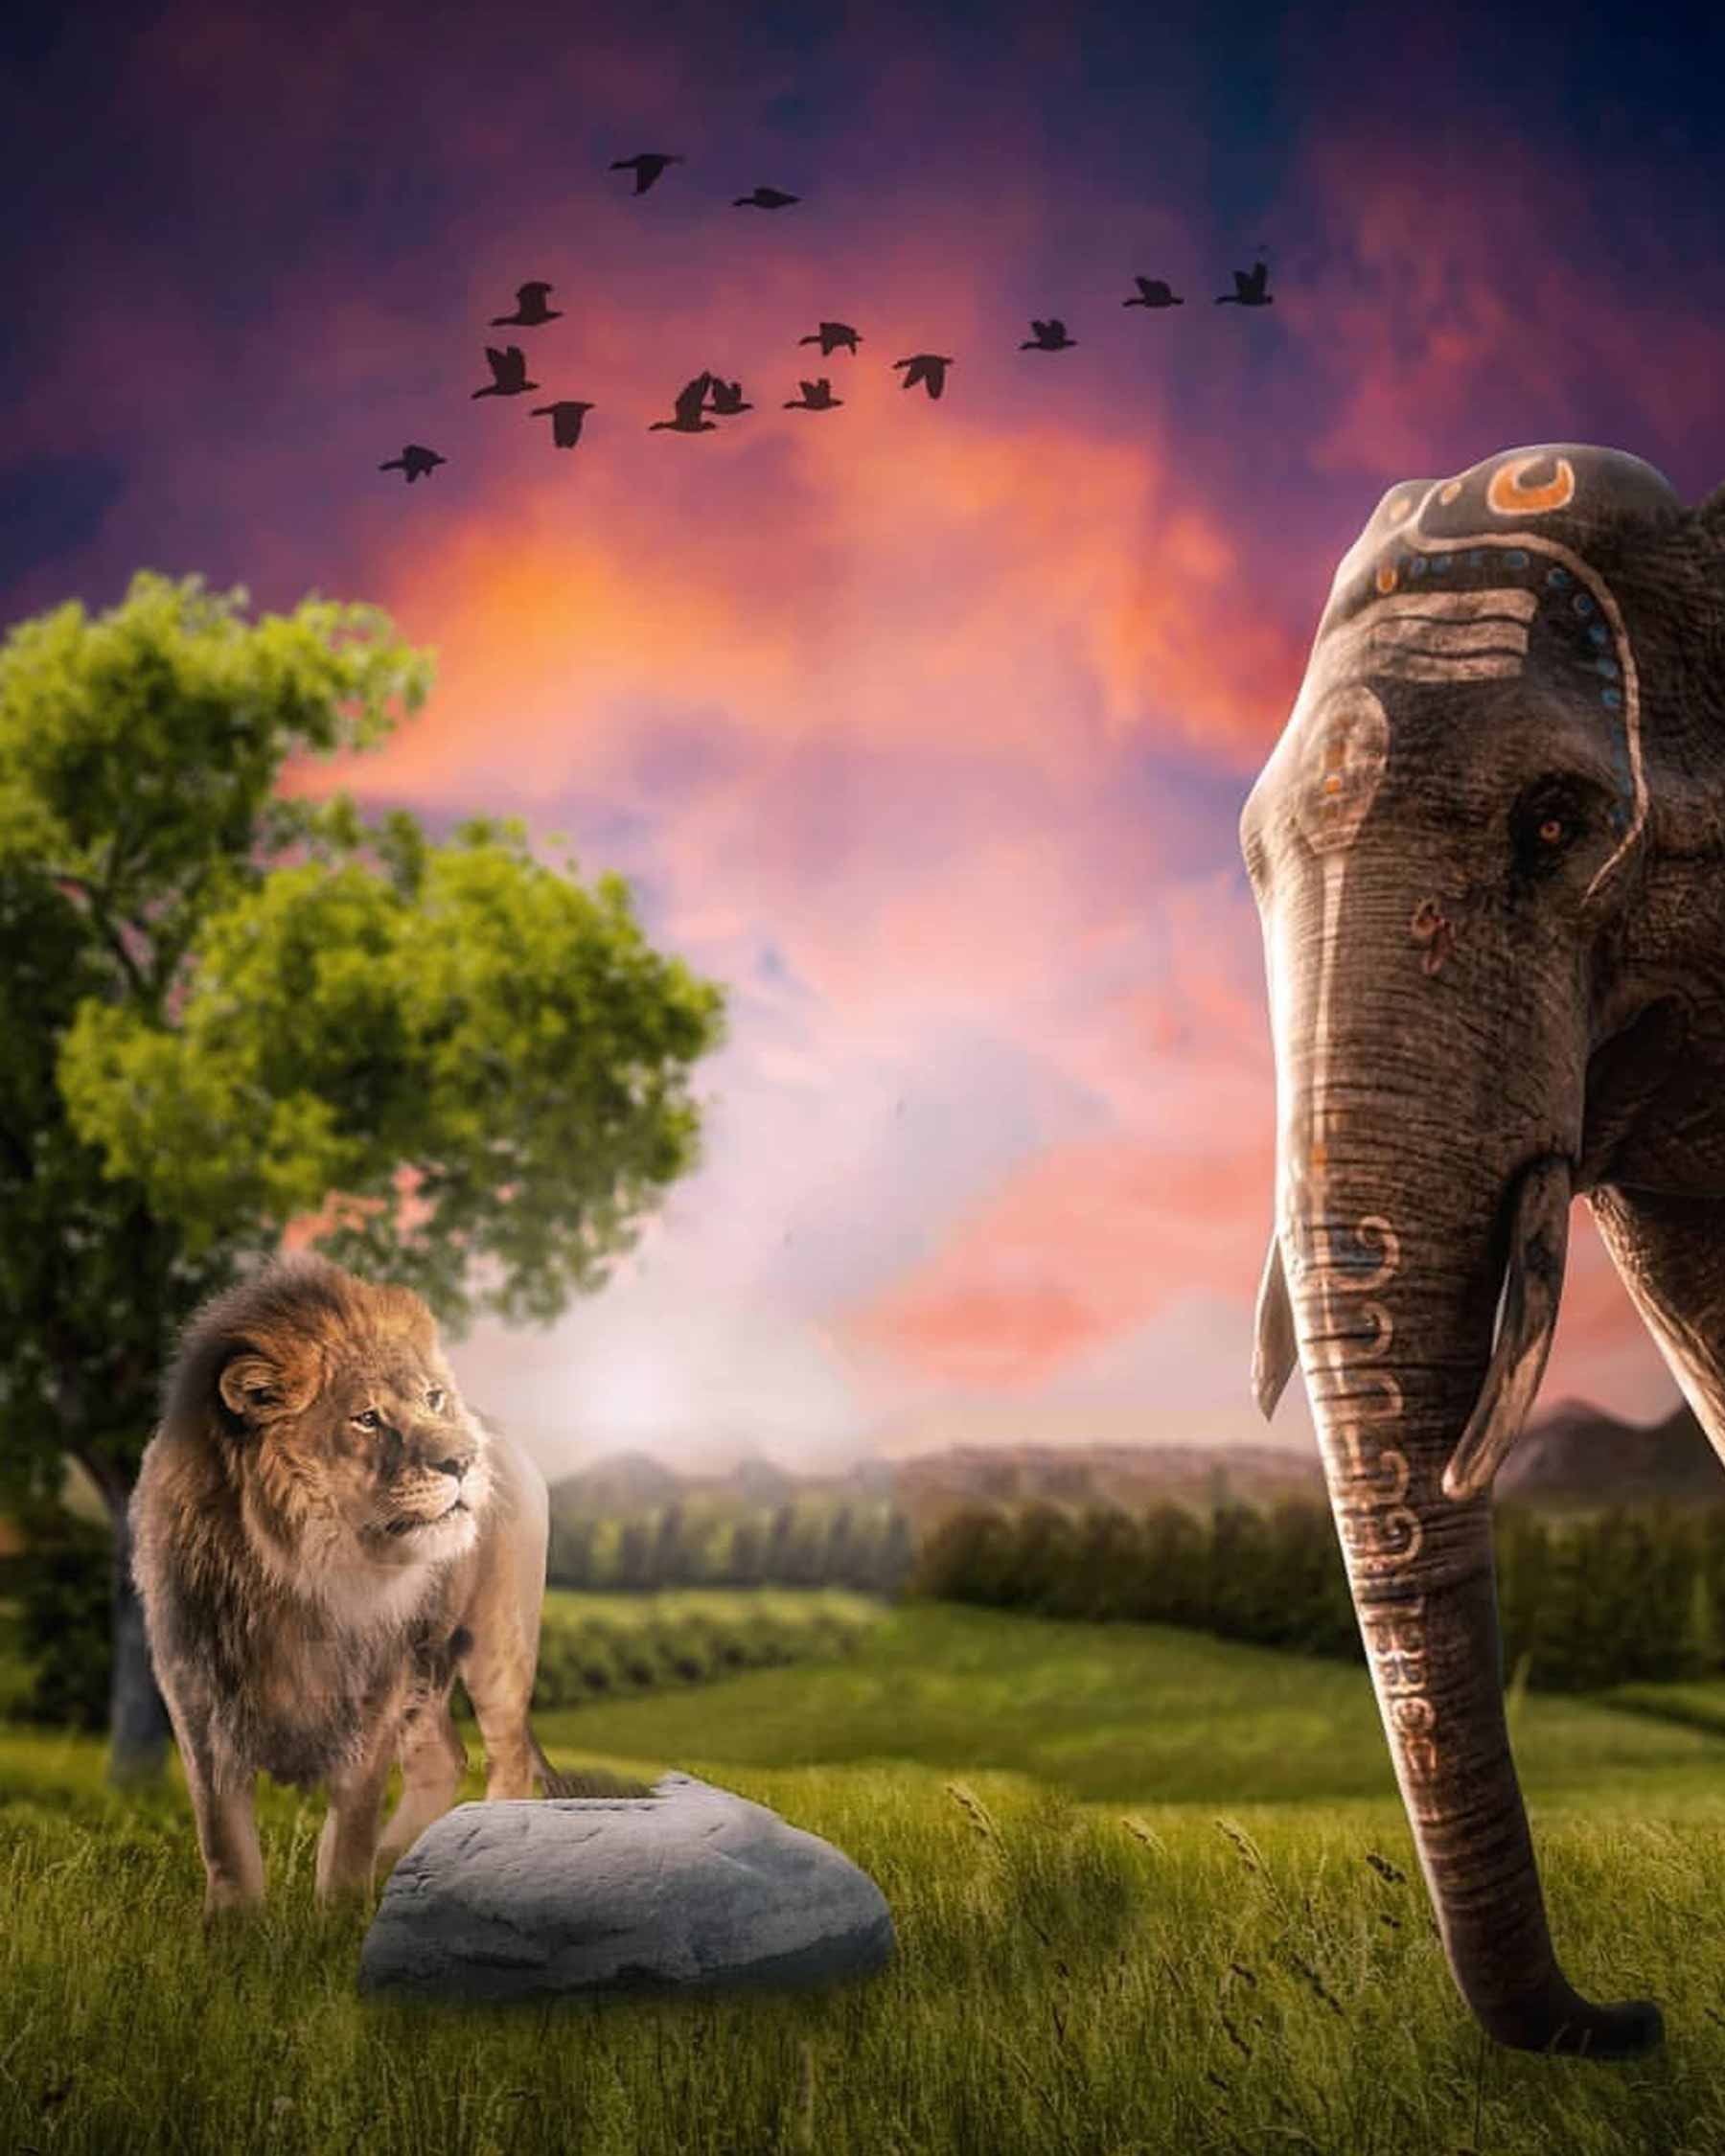 Elephant and Lion Snapseed Background Free Stock Image